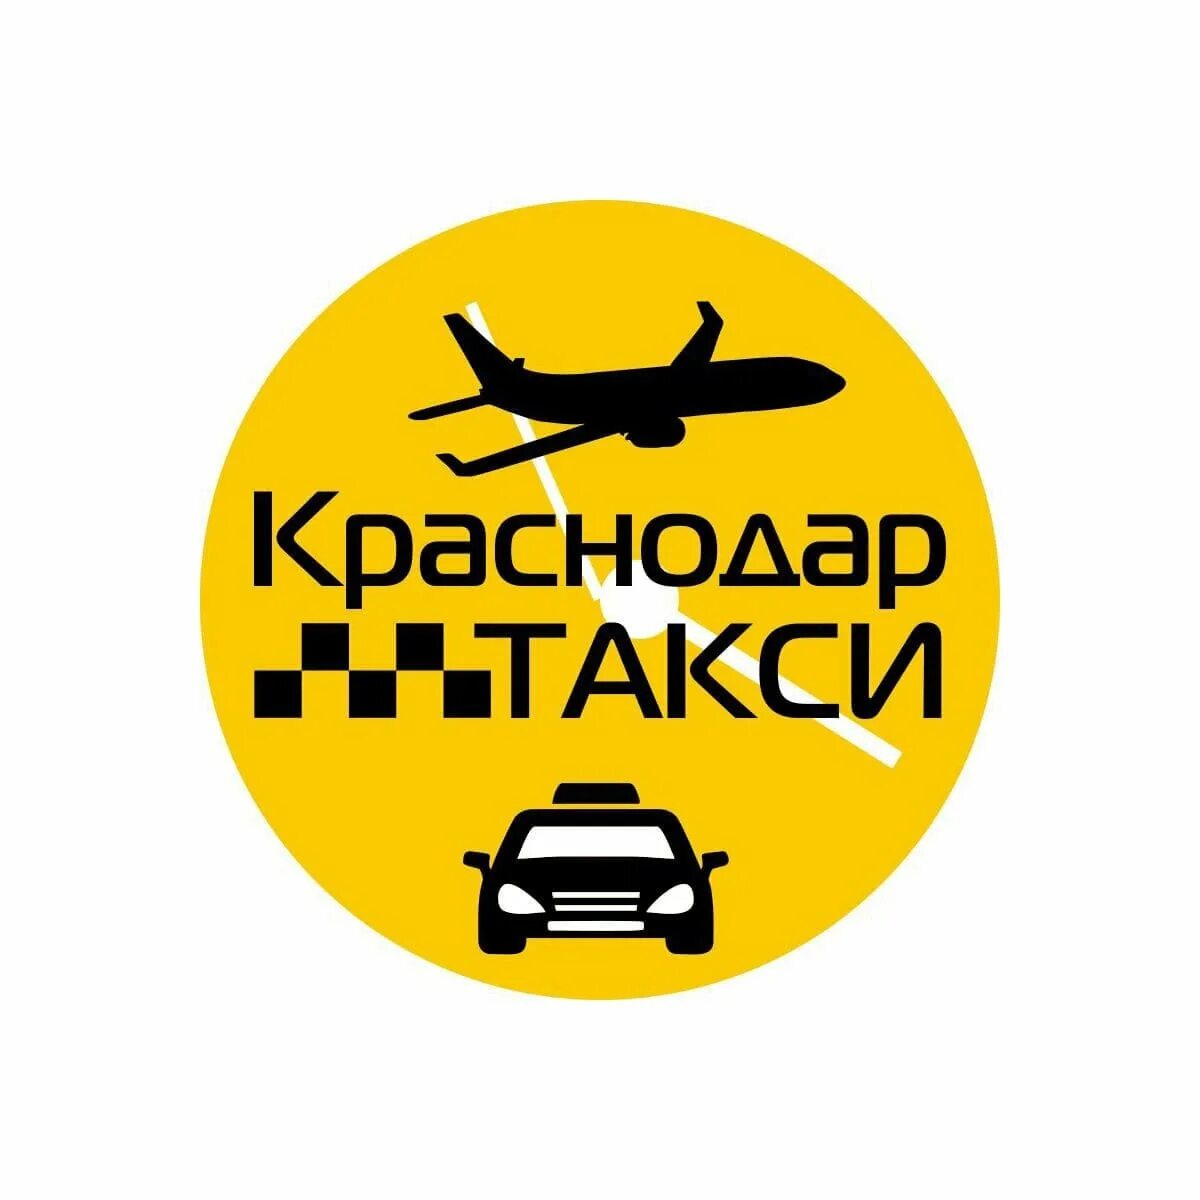 Такси краснодар номер телефона для заказа. Такси Краснодар. Трансфер Краснодар такси. Номер такси в Краснодаре. Номер таксиста в Краснодаре.